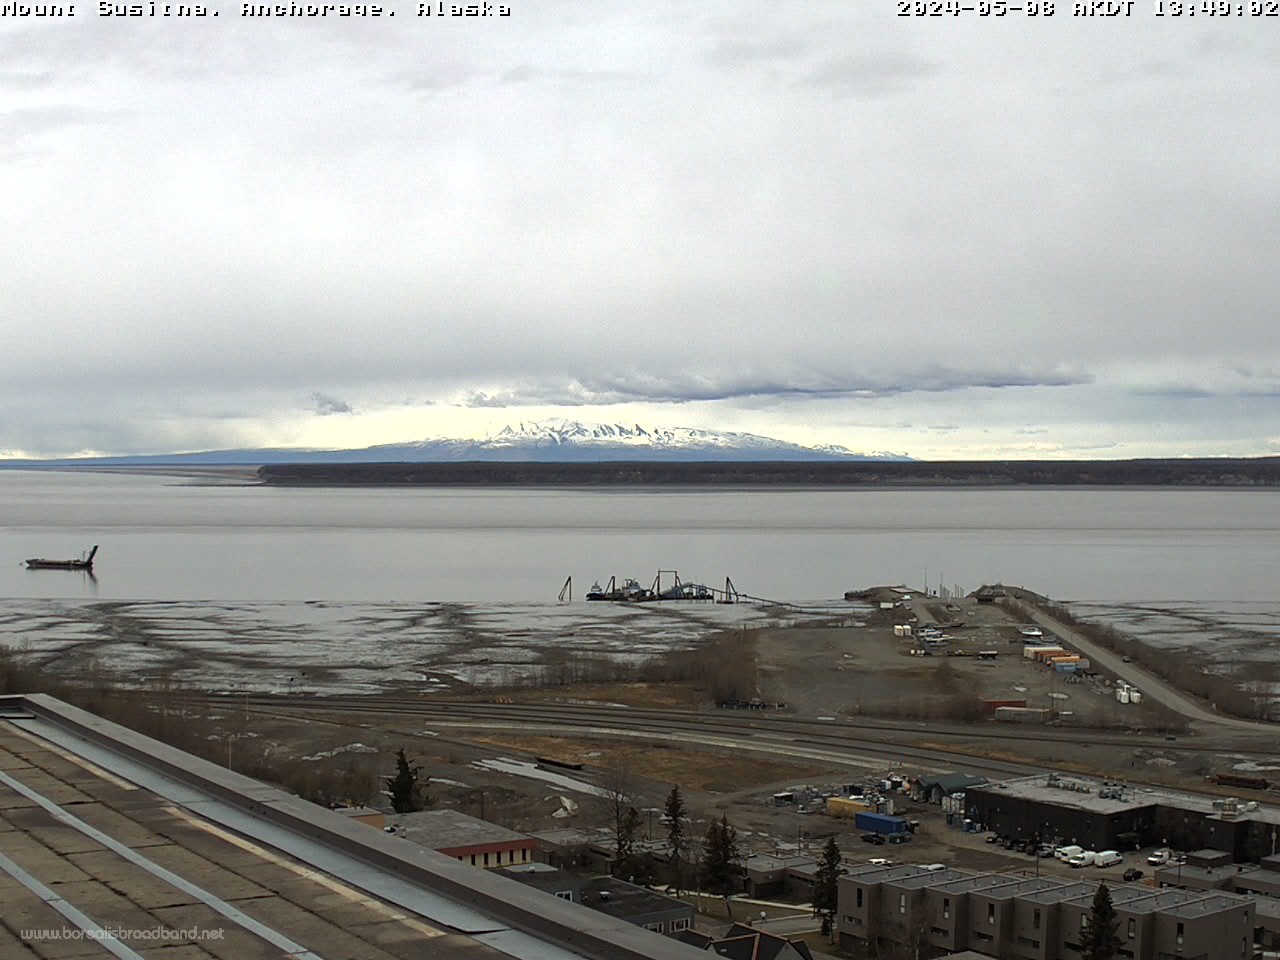 Mount Susitna, Alaska Sat. 13:49